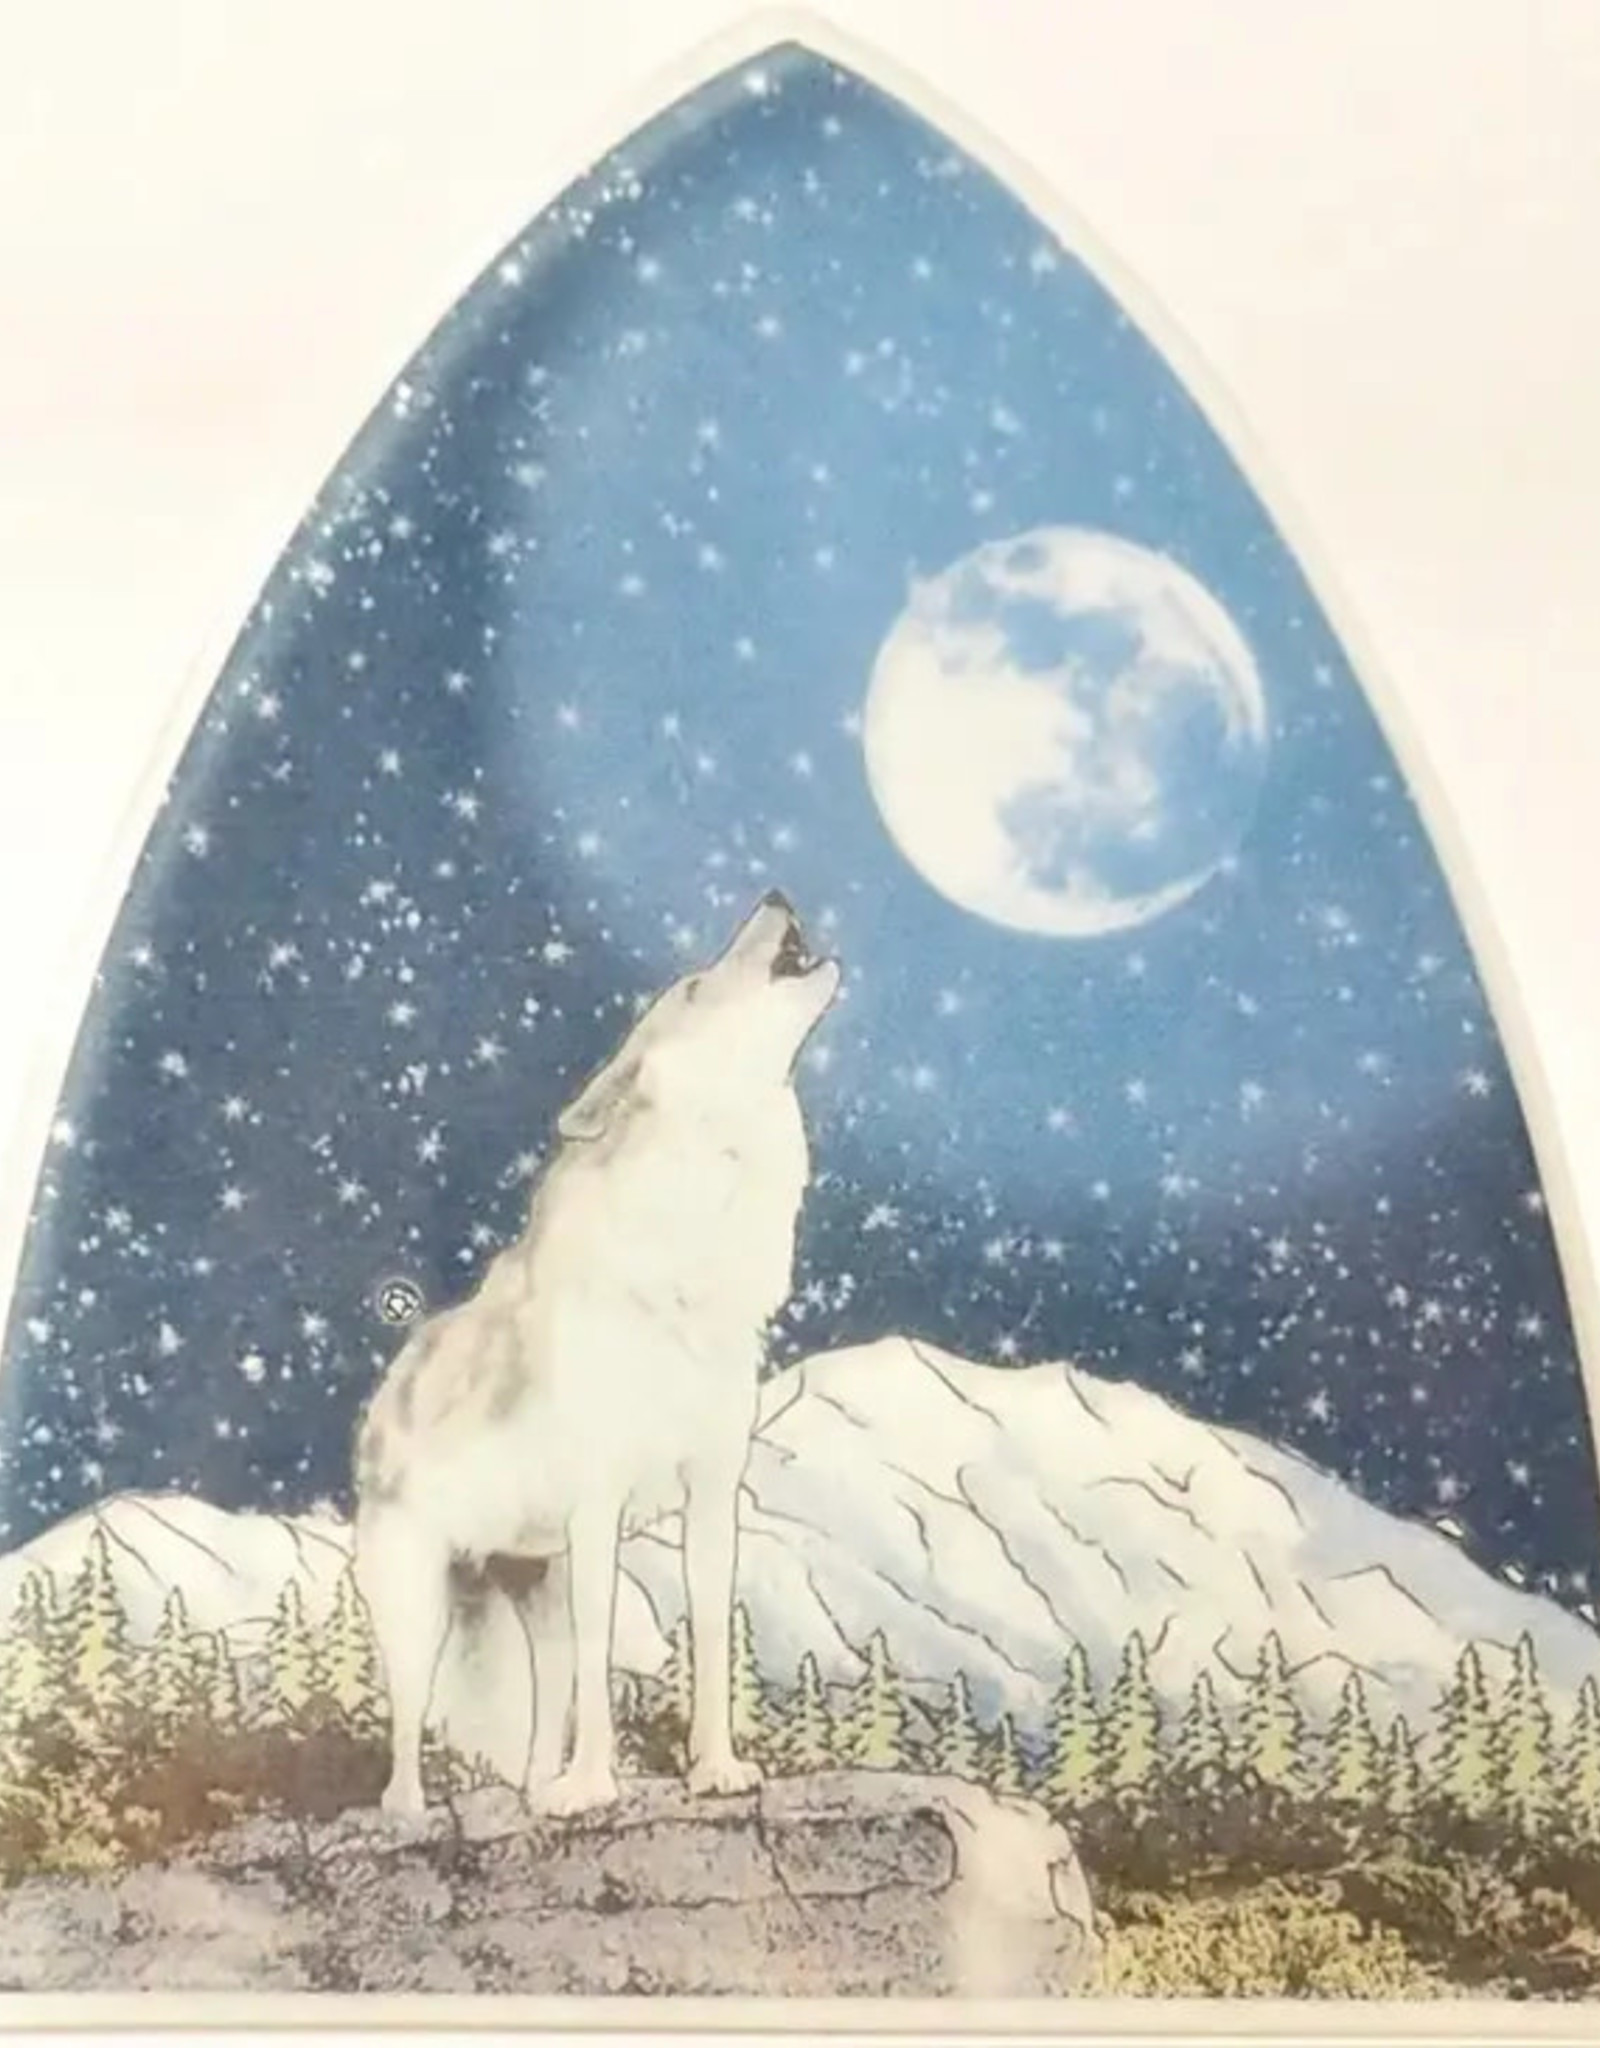 Pampeana Wolf and the Moon Nightlight